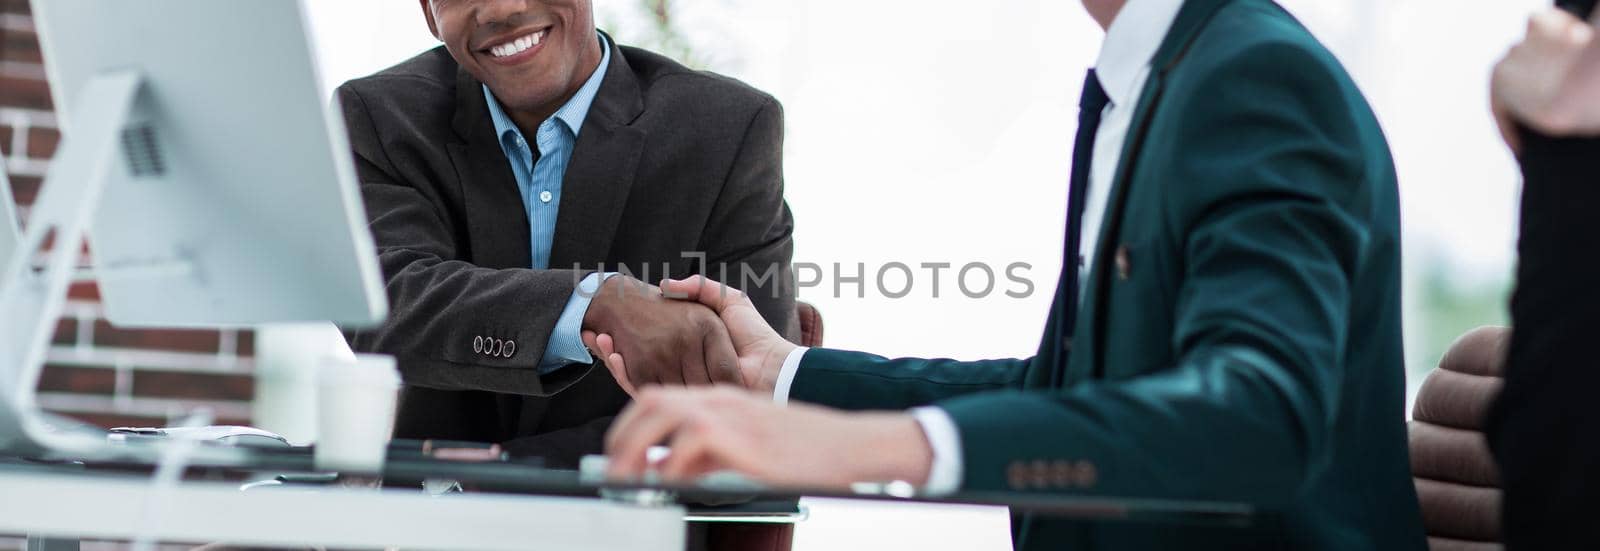 handshake international business partners on a Desk by SmartPhotoLab